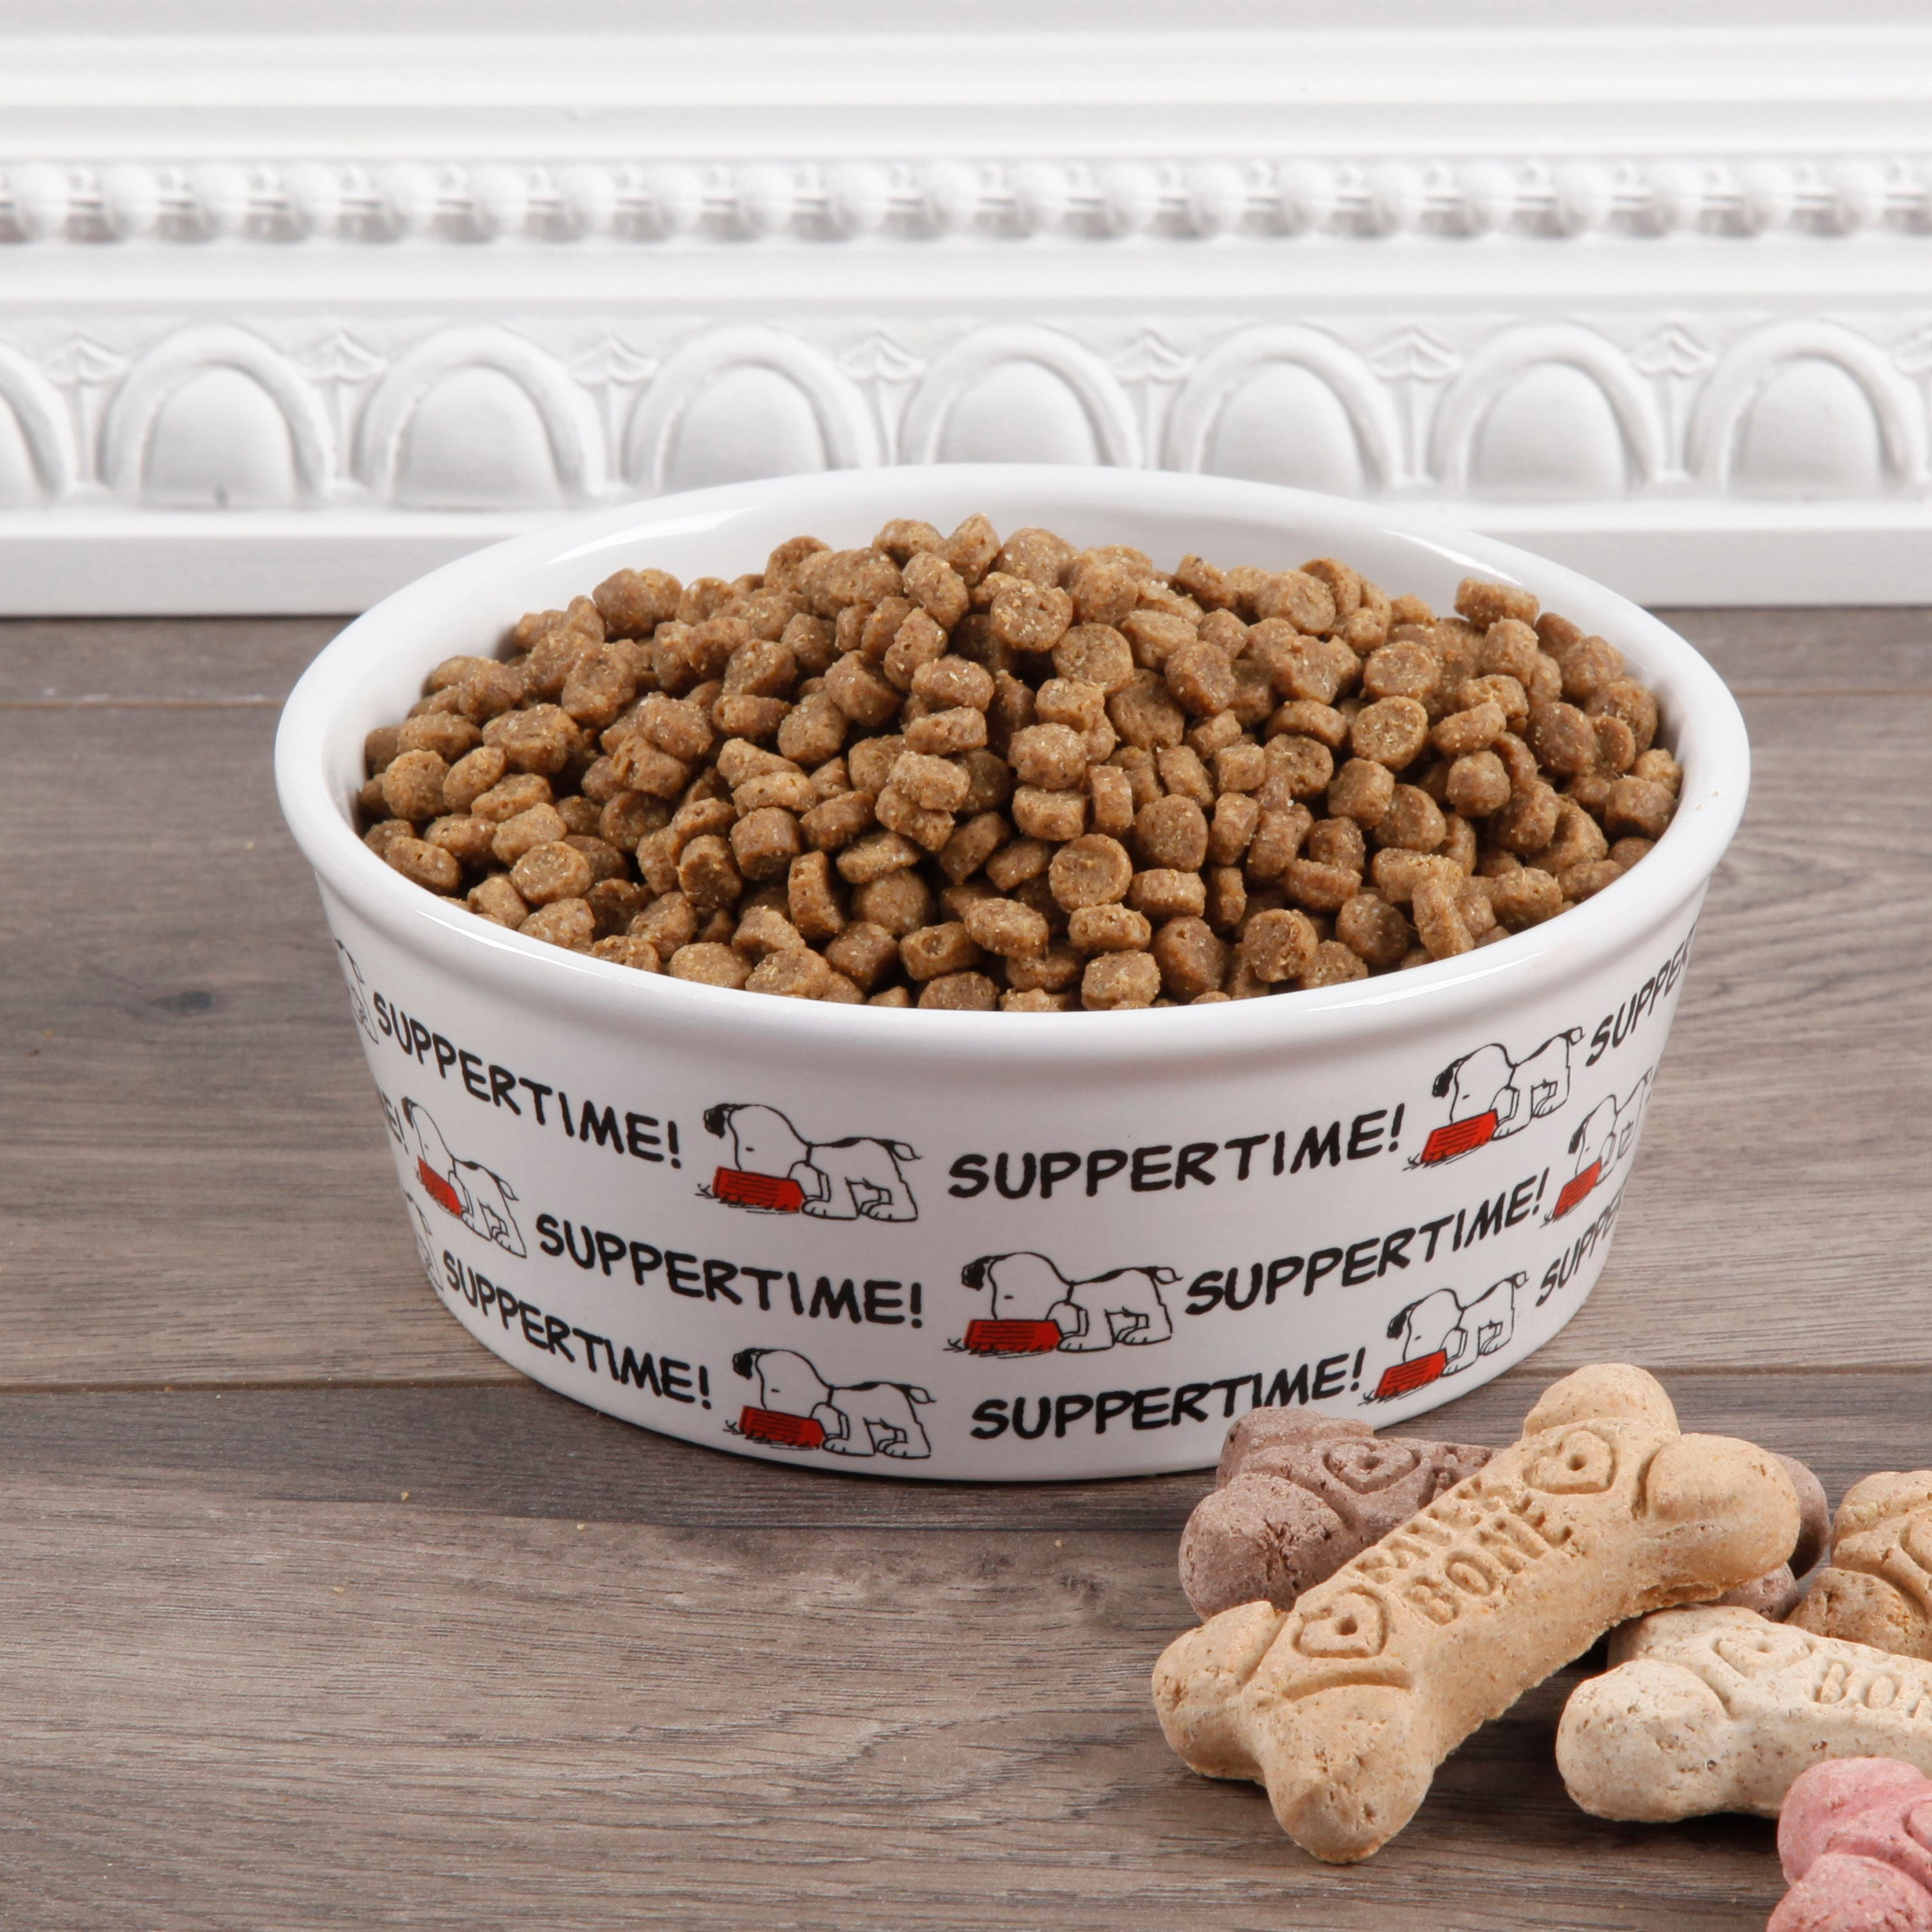 peanuts dog bowl